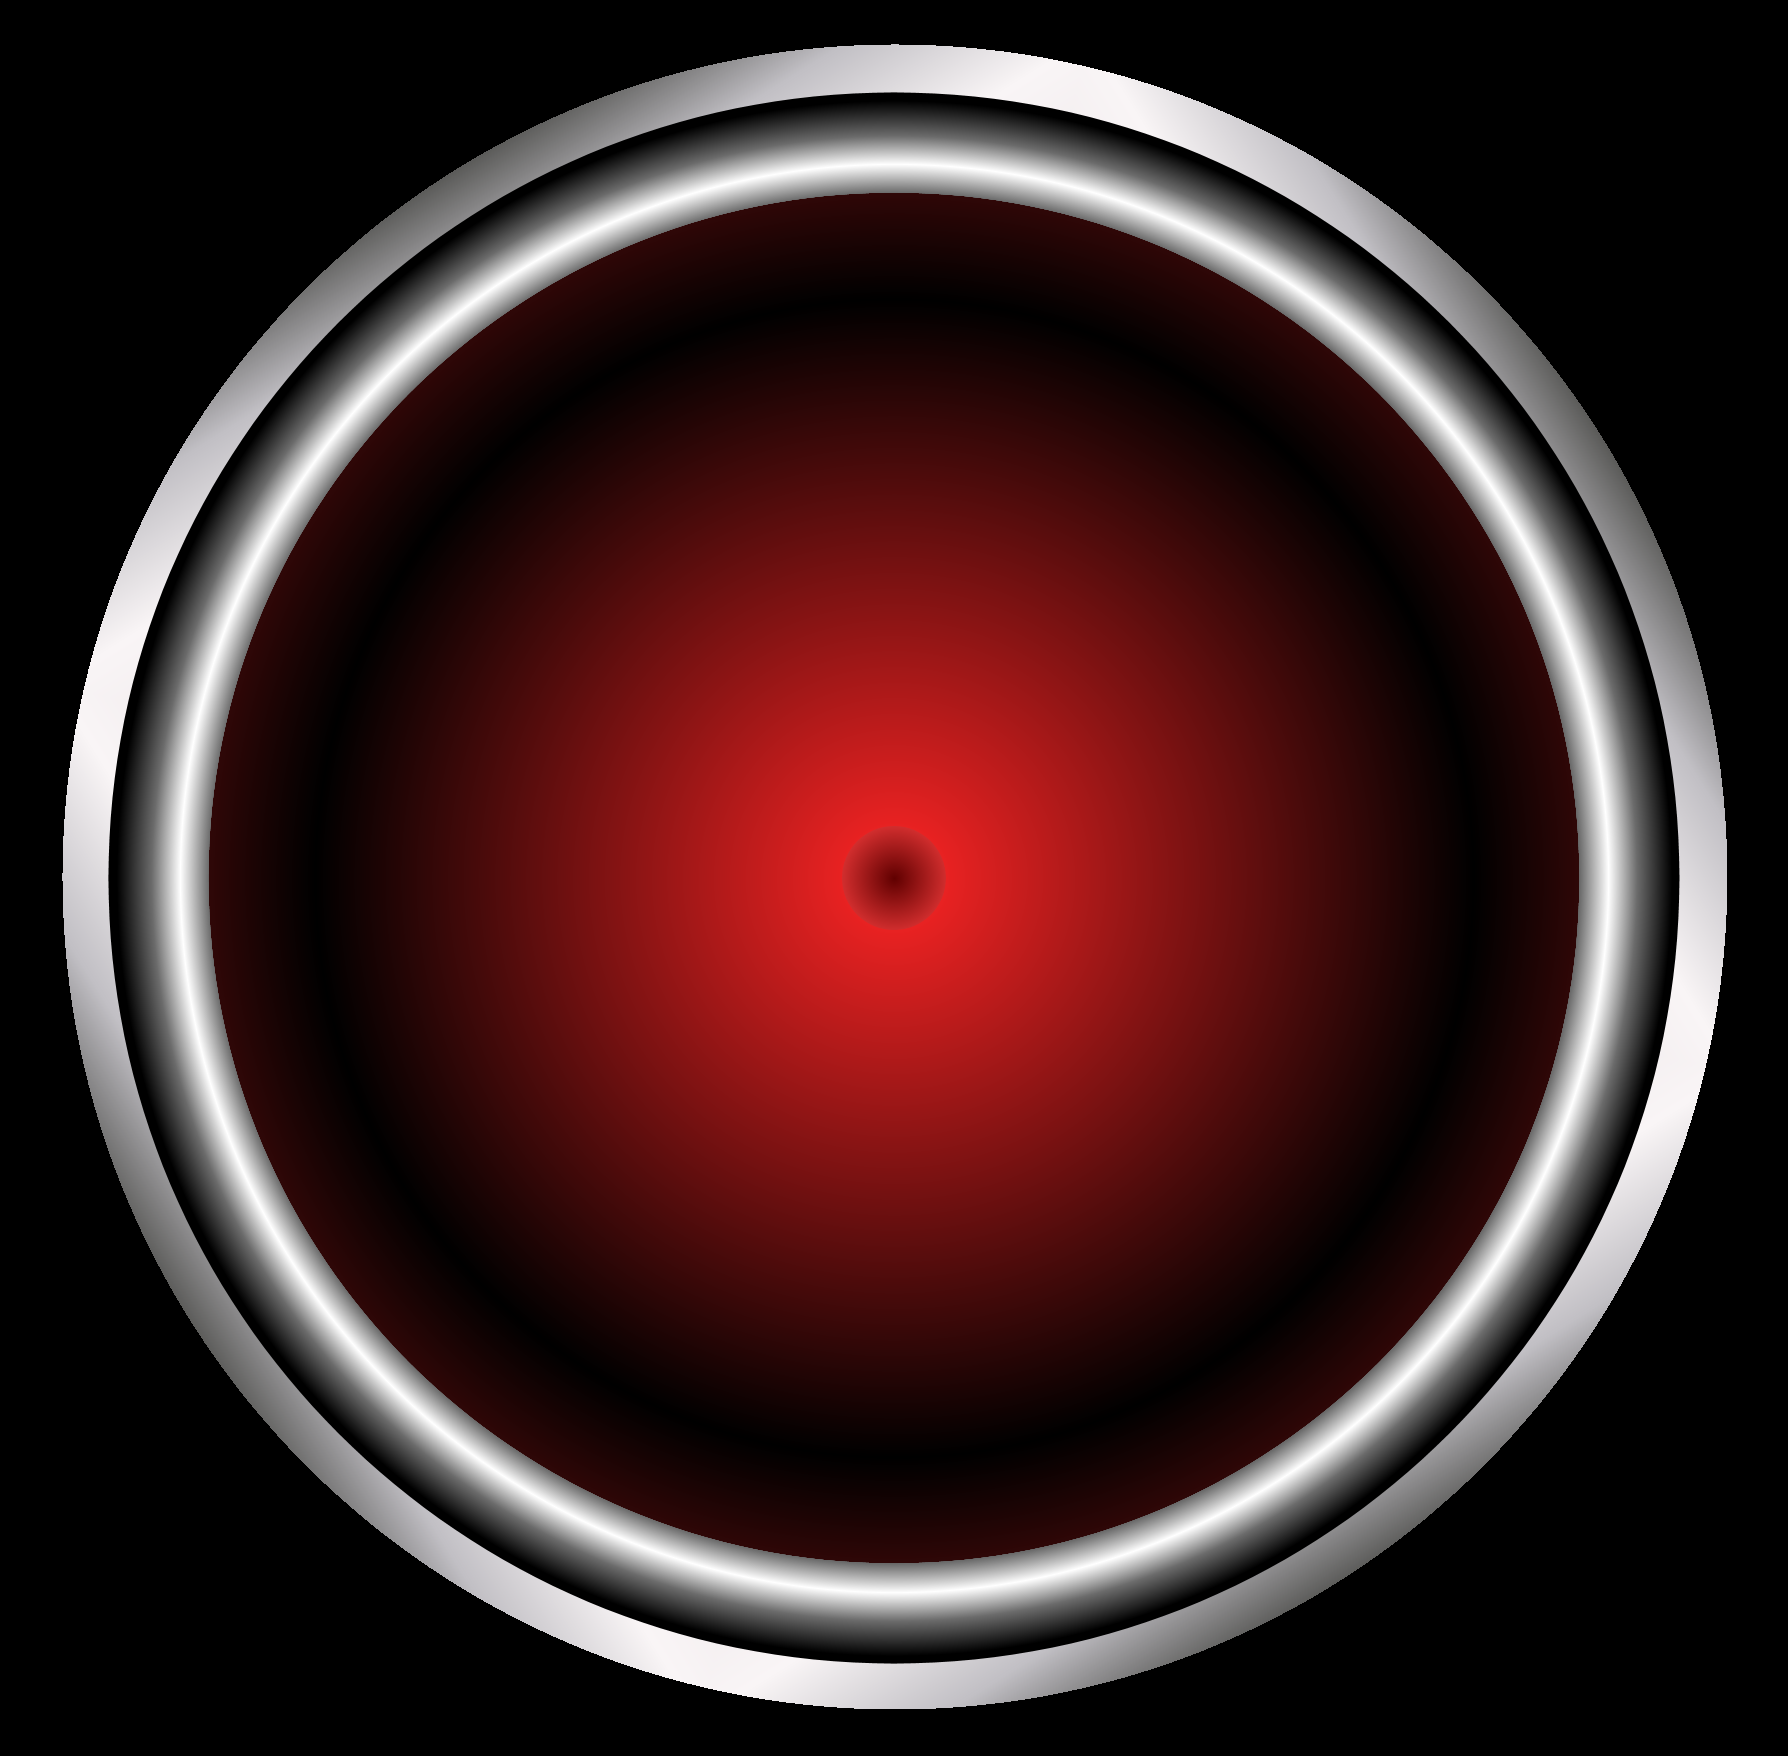 Red-eye effect - Wikipedia